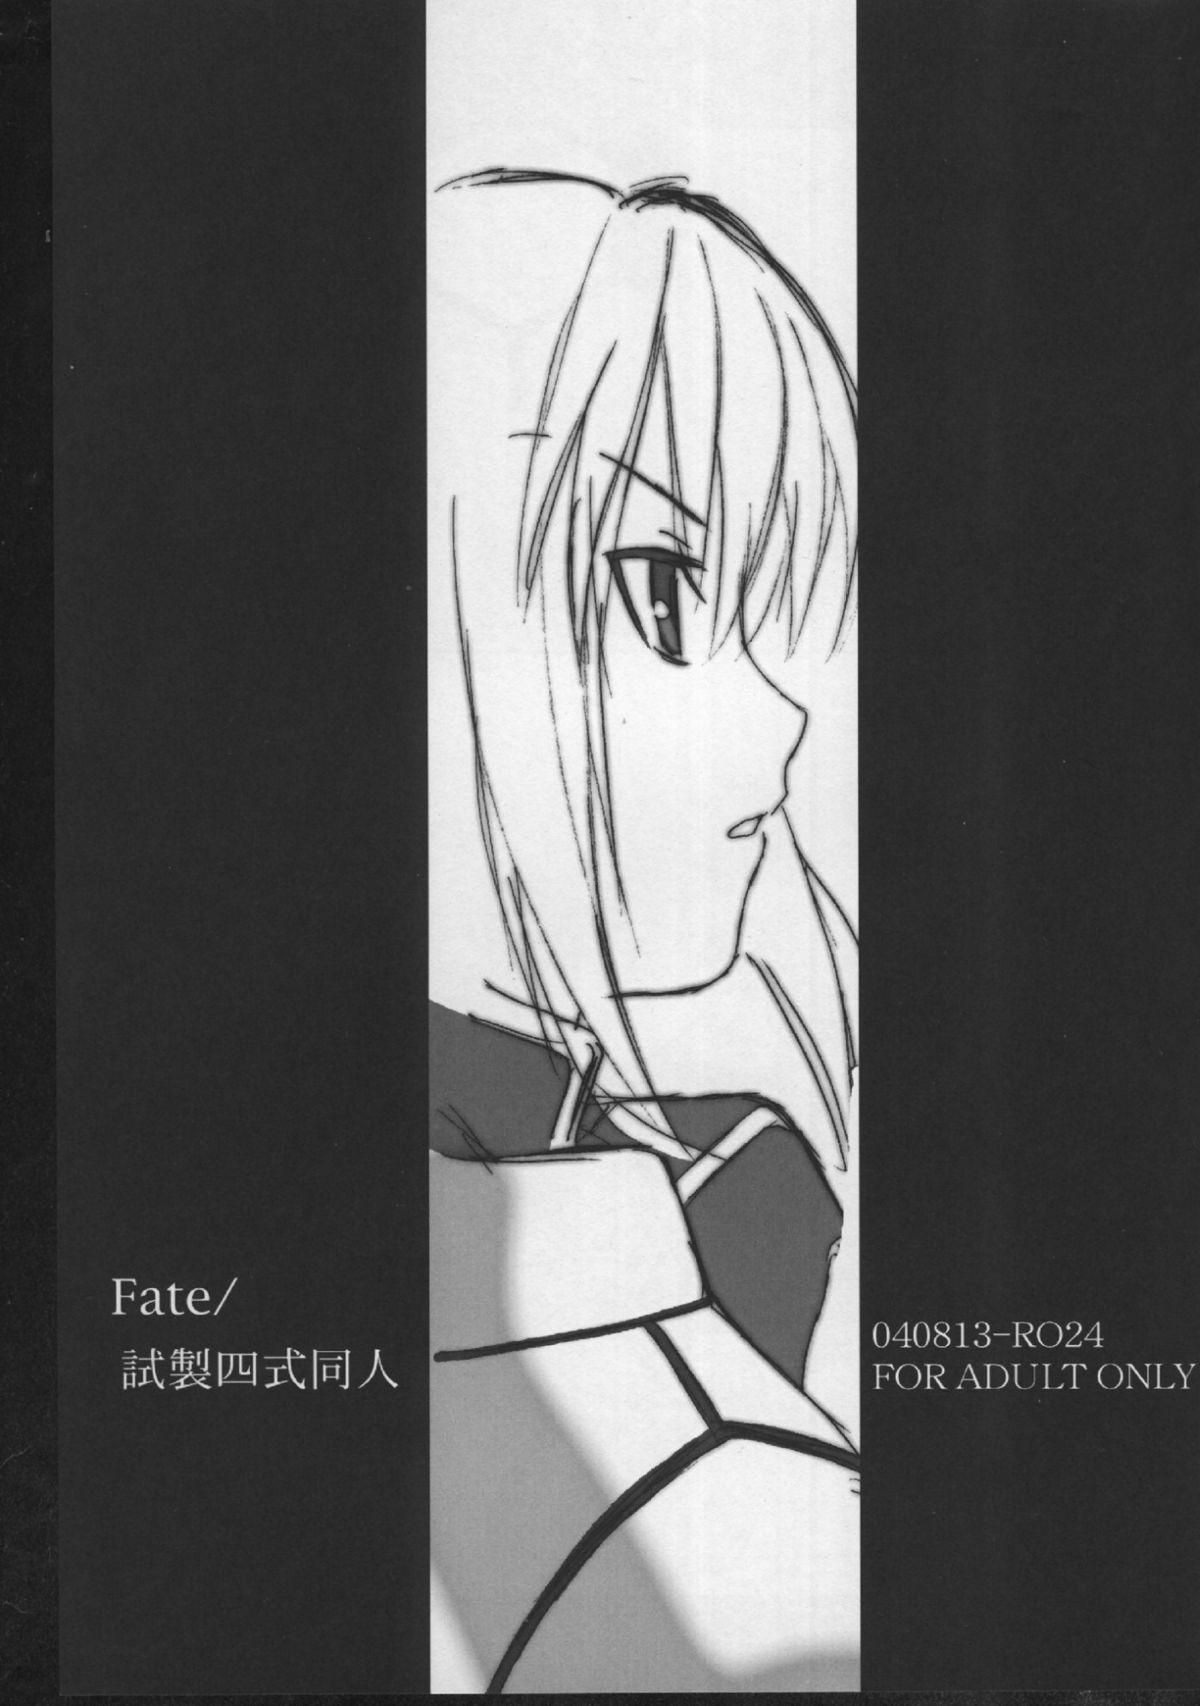 Adolescente Fate/Shisei Yon-shiki Doujin - Fate stay night Flash - Page 2